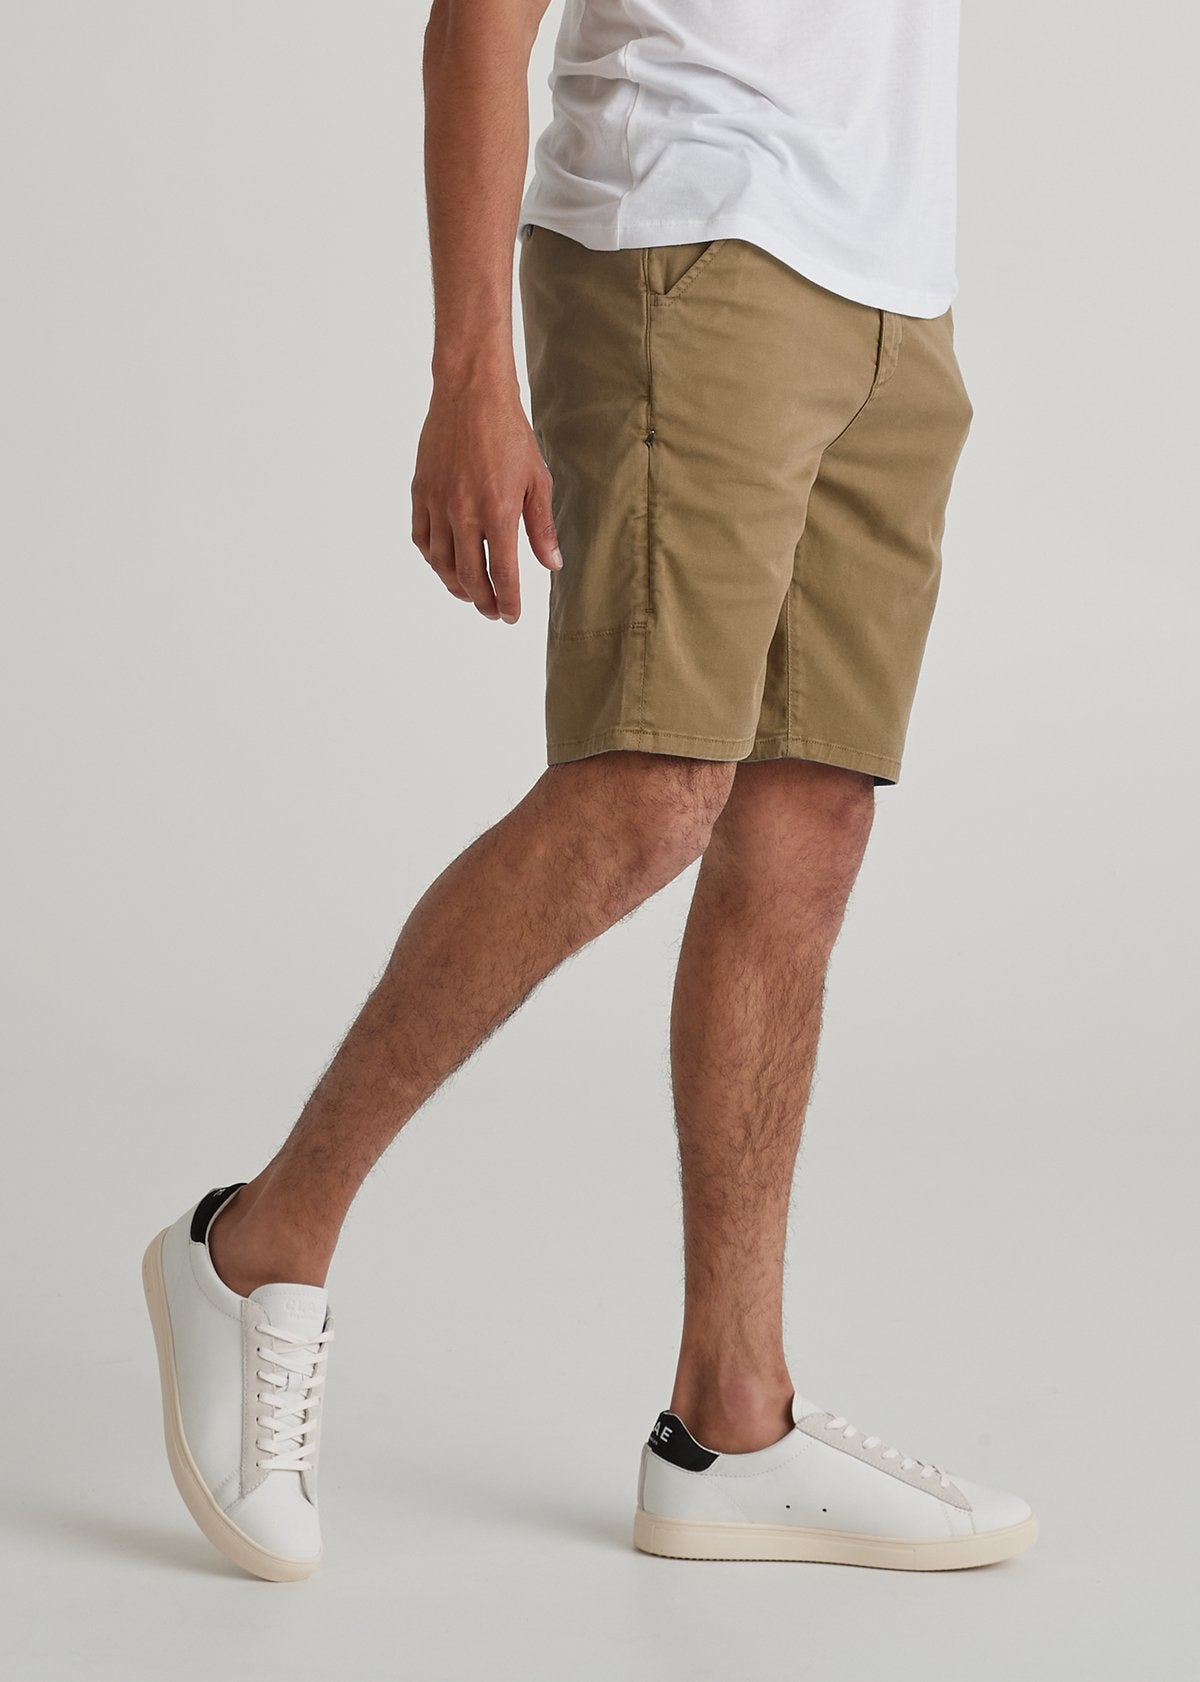 mens khaki lightweight shorts side